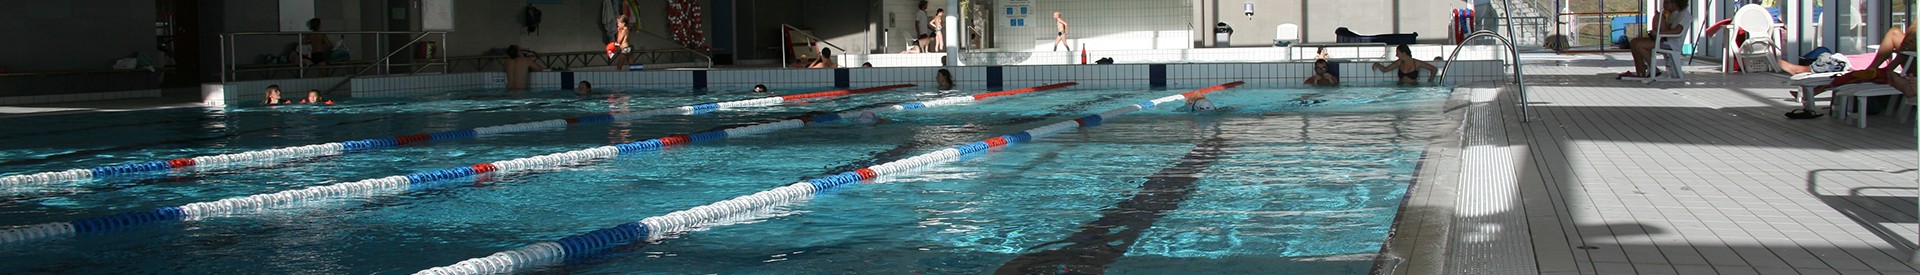 cours-natation-aquajade-piscine-st-brevin-sud-estuaire-254